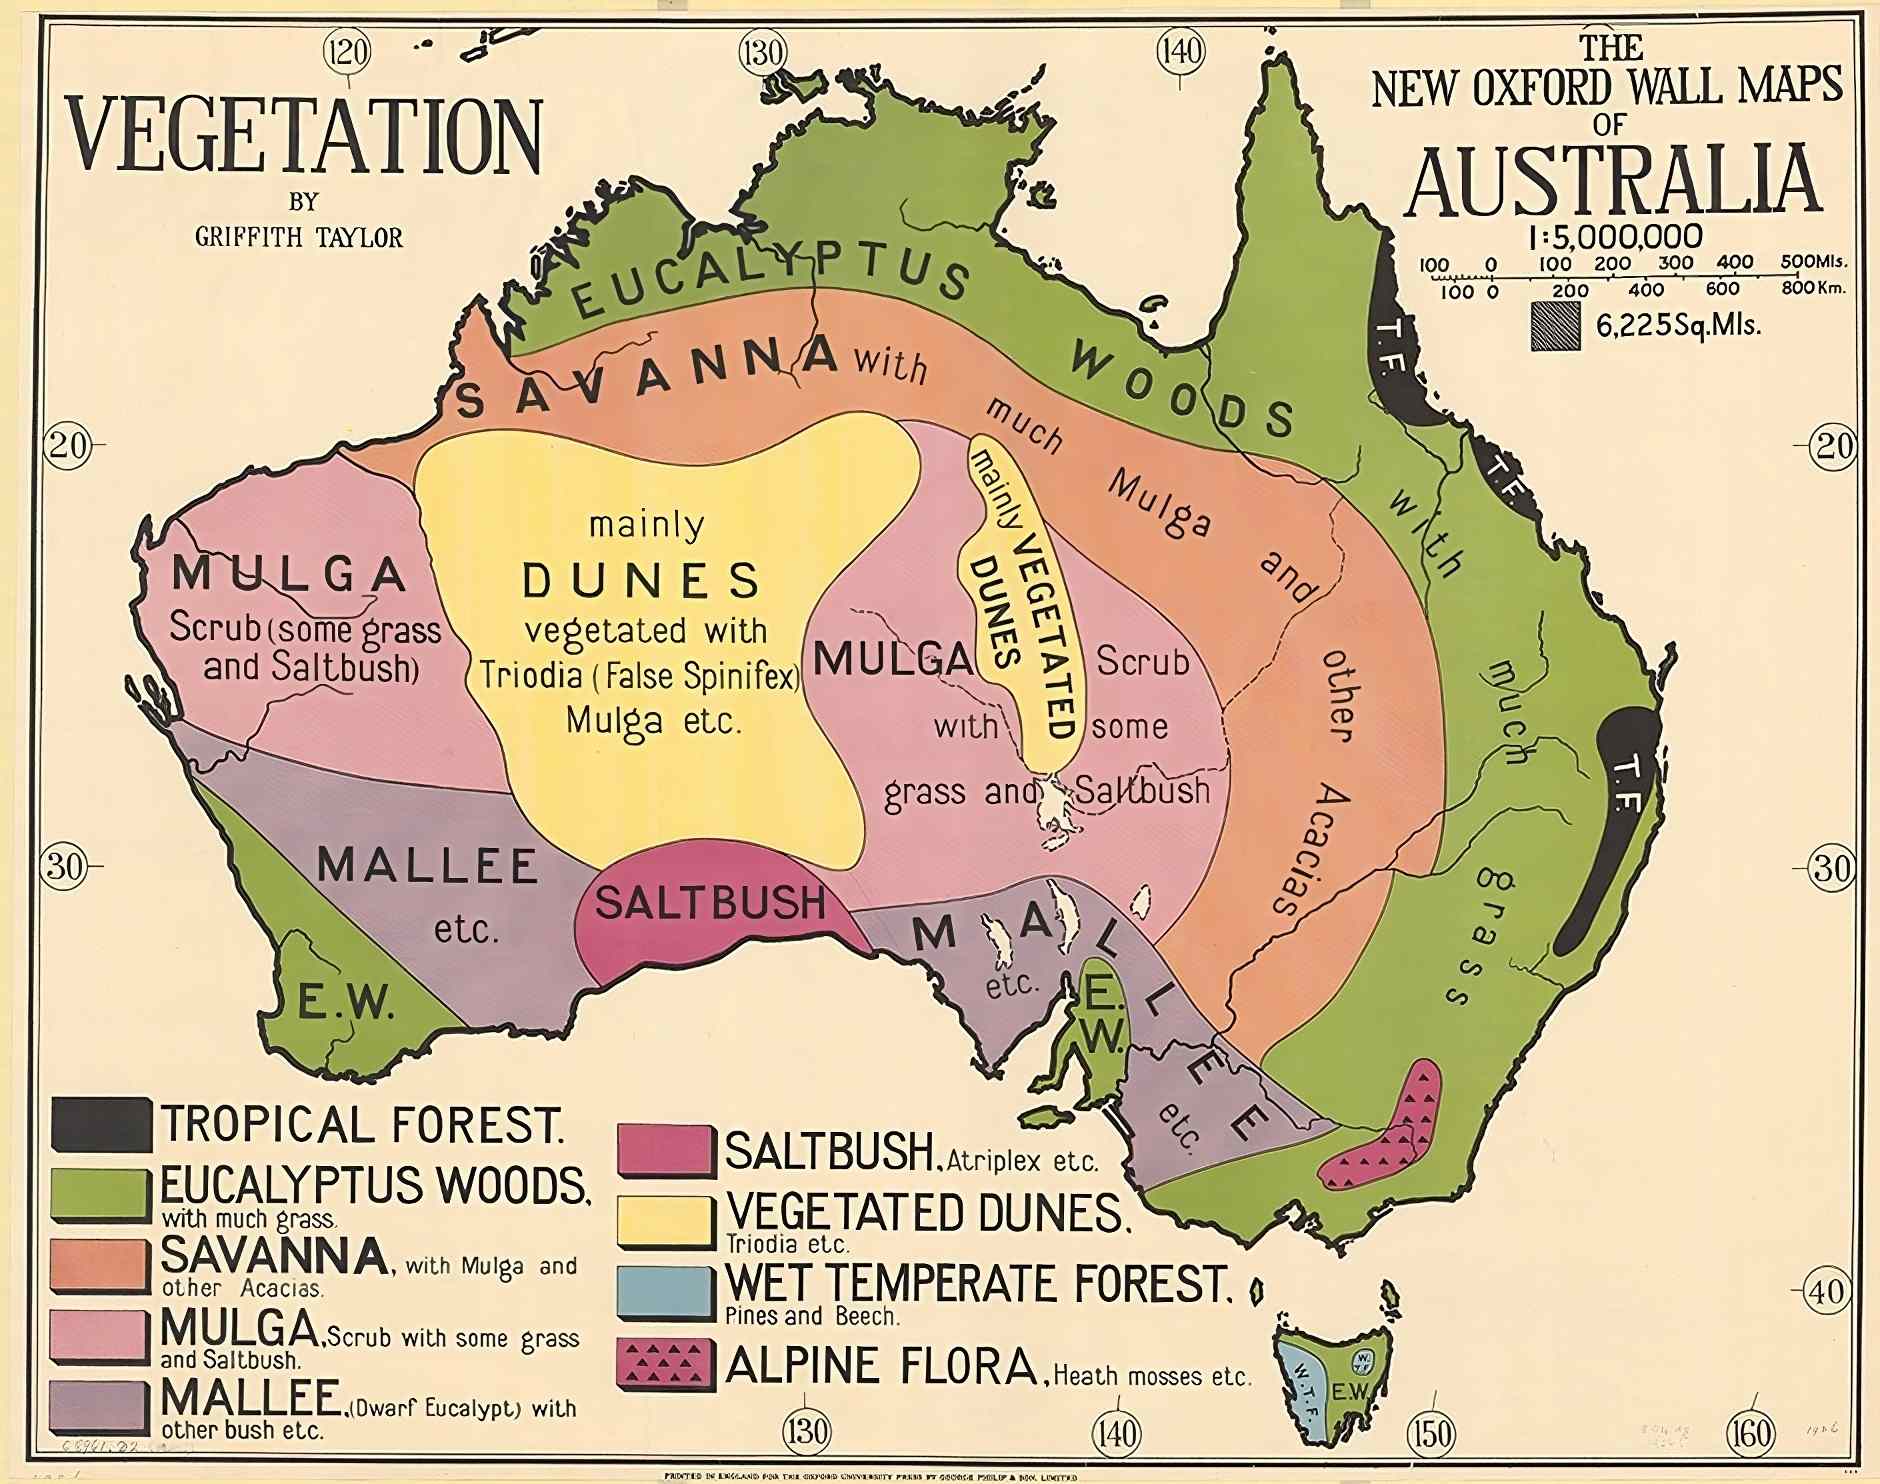 1920s Map of Australia and its Vegetation Zones.